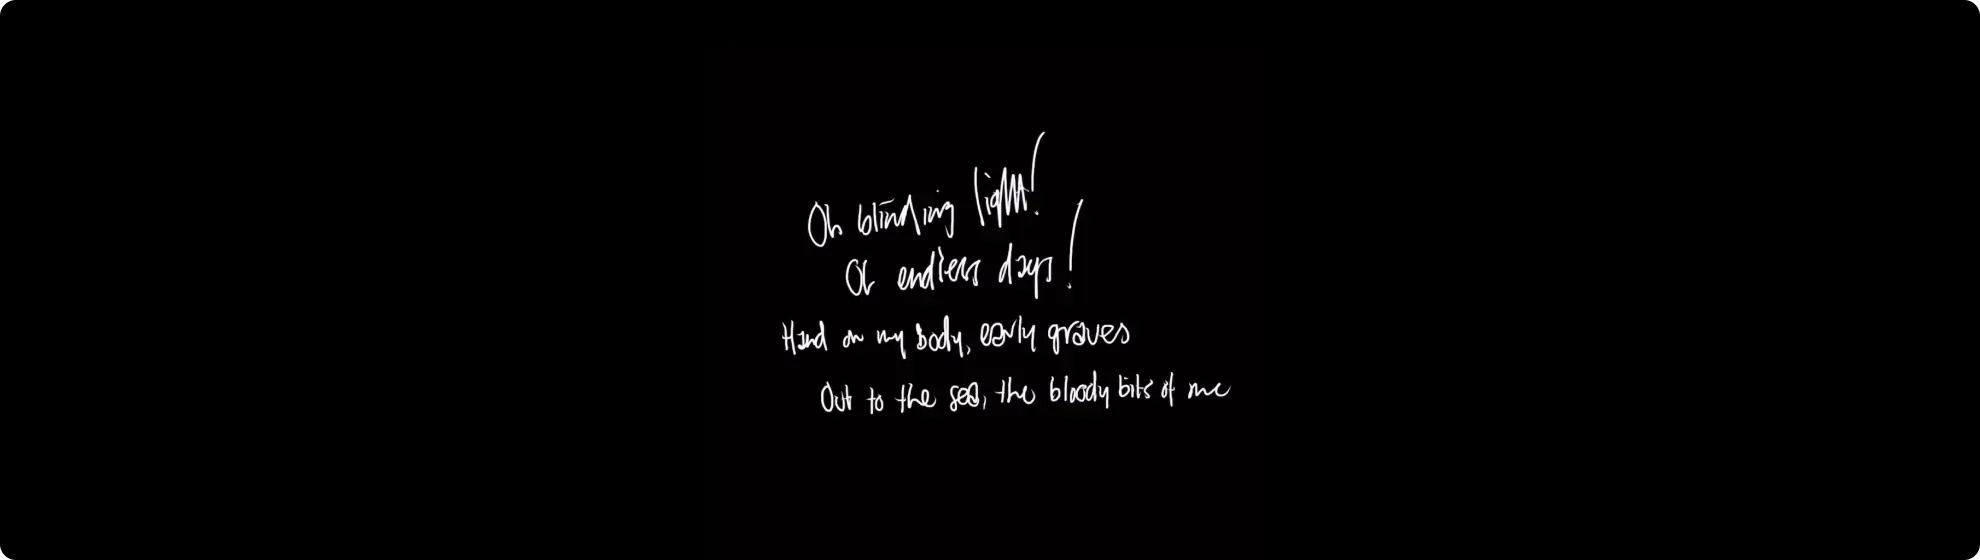 The lyrics that are get overlaid on the polaroids.